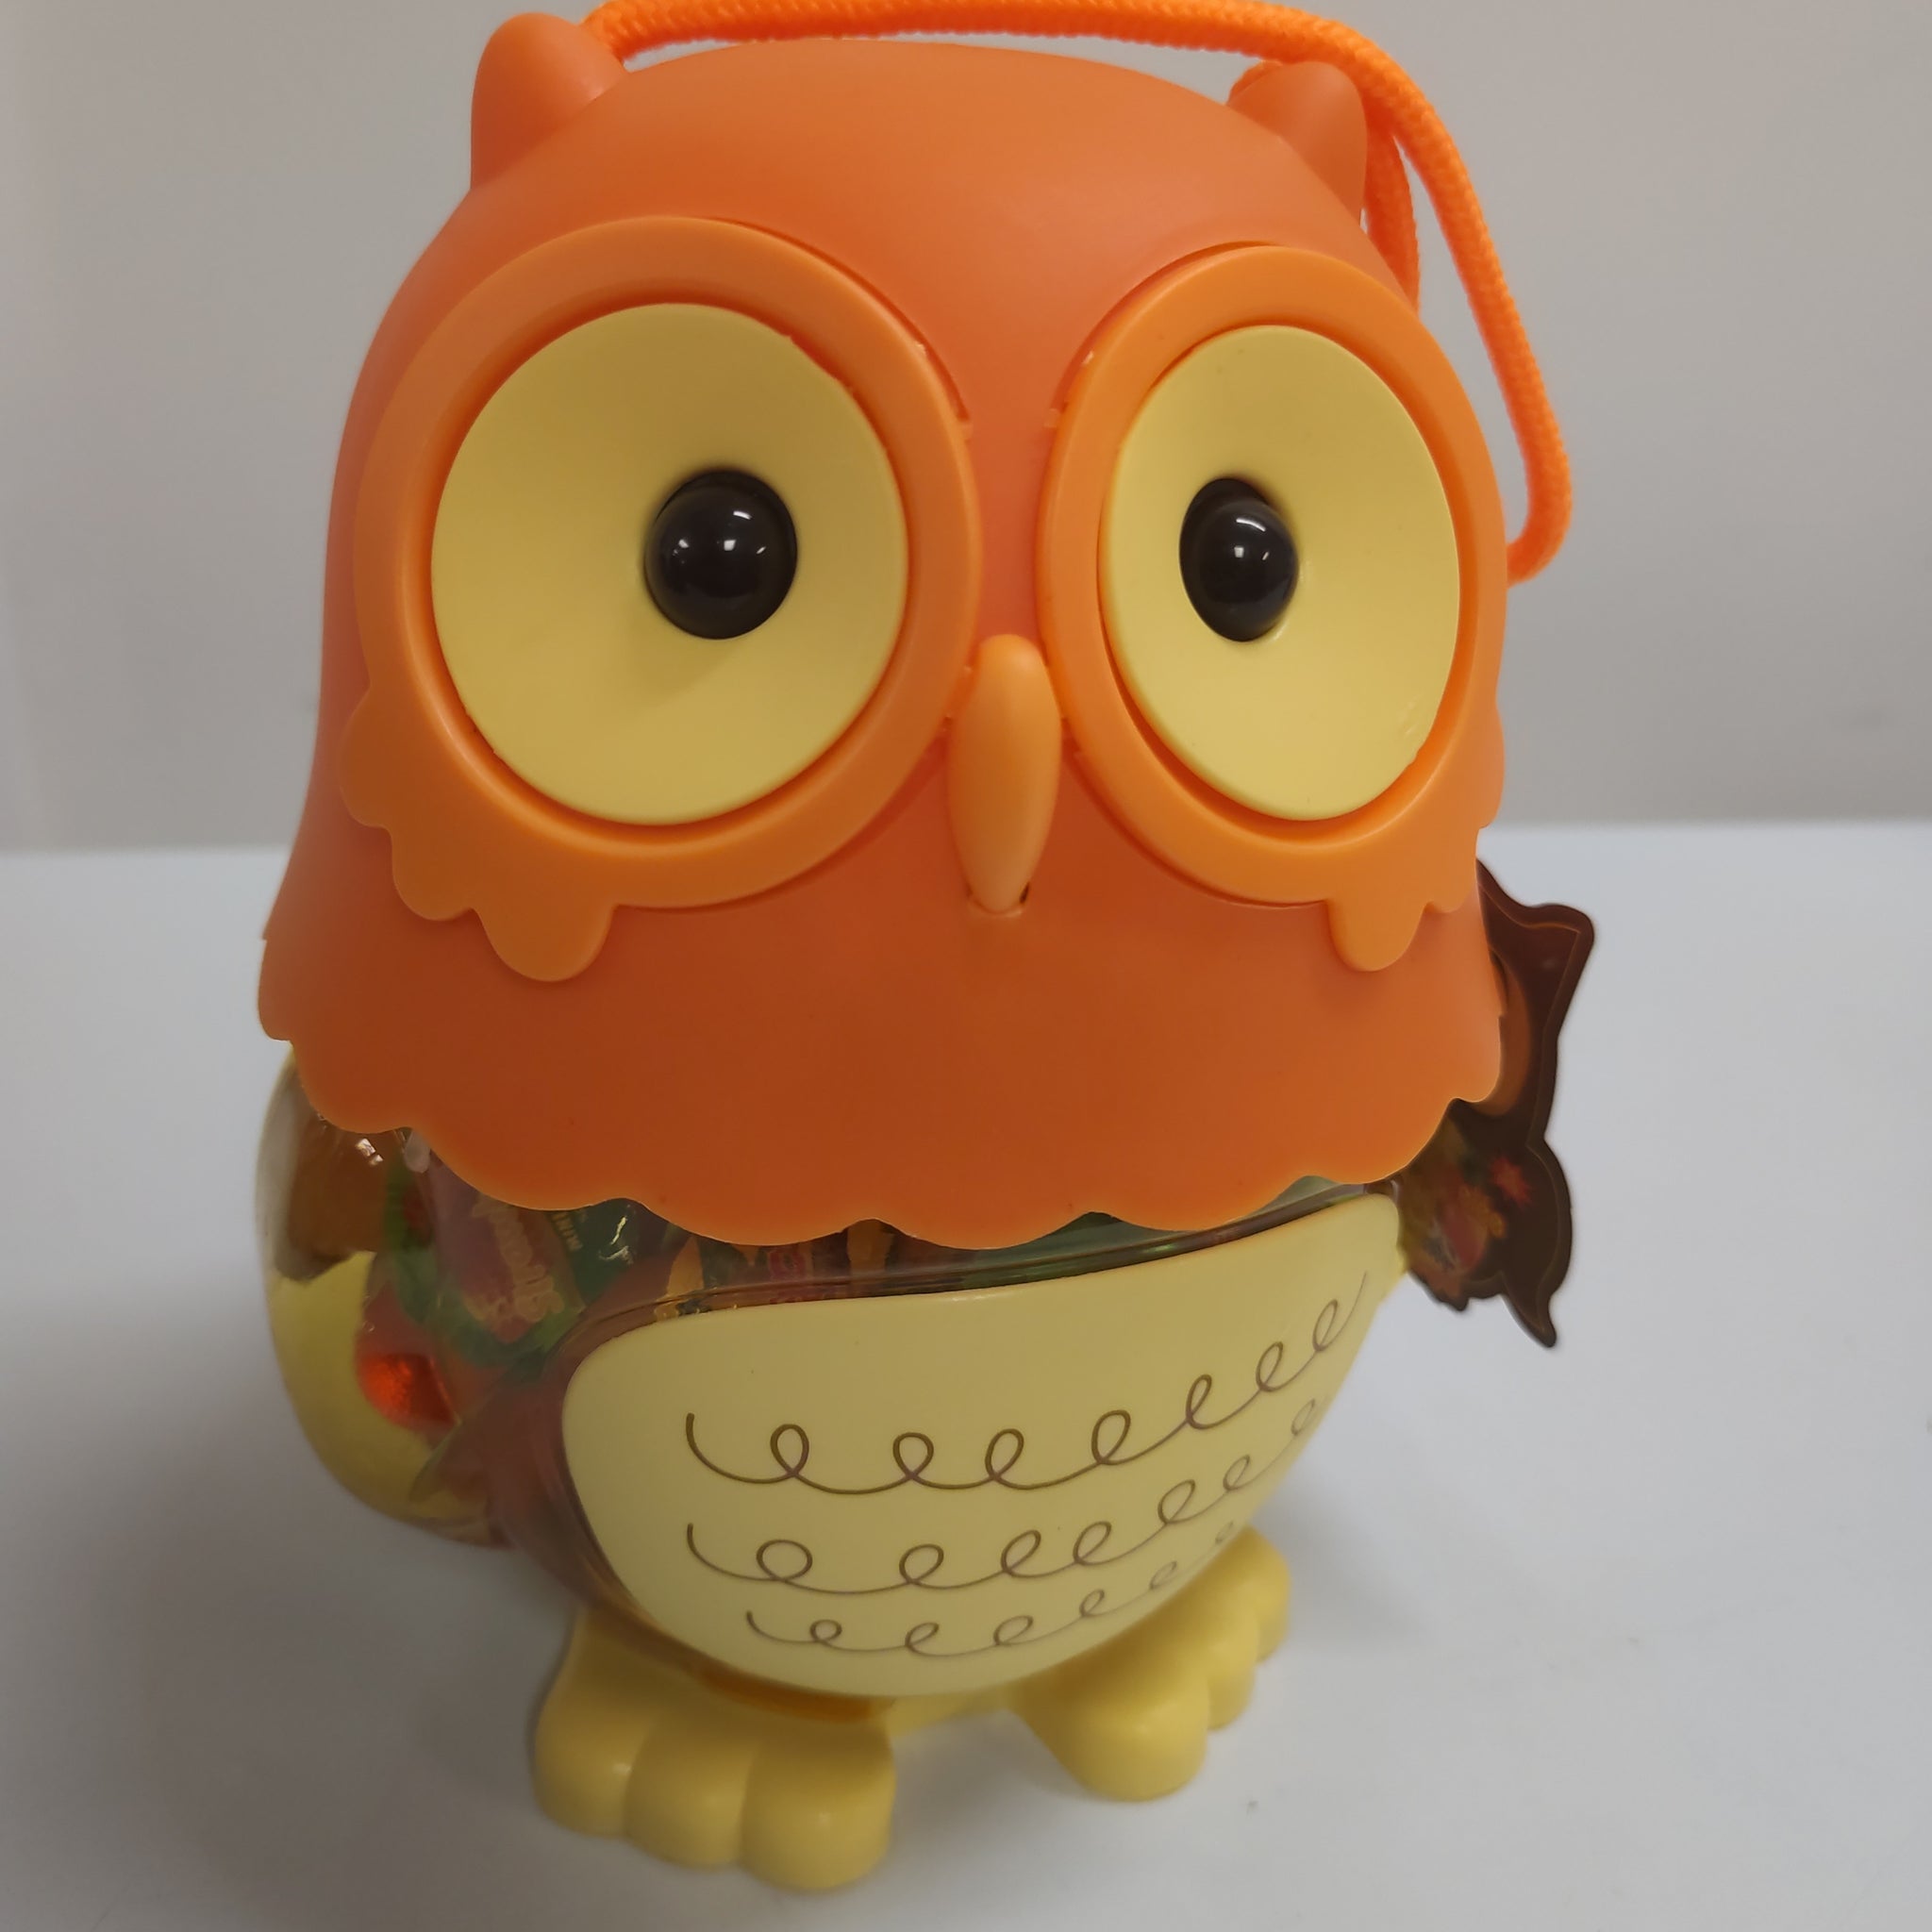 Larbee mini jelly (orange owl) 880g